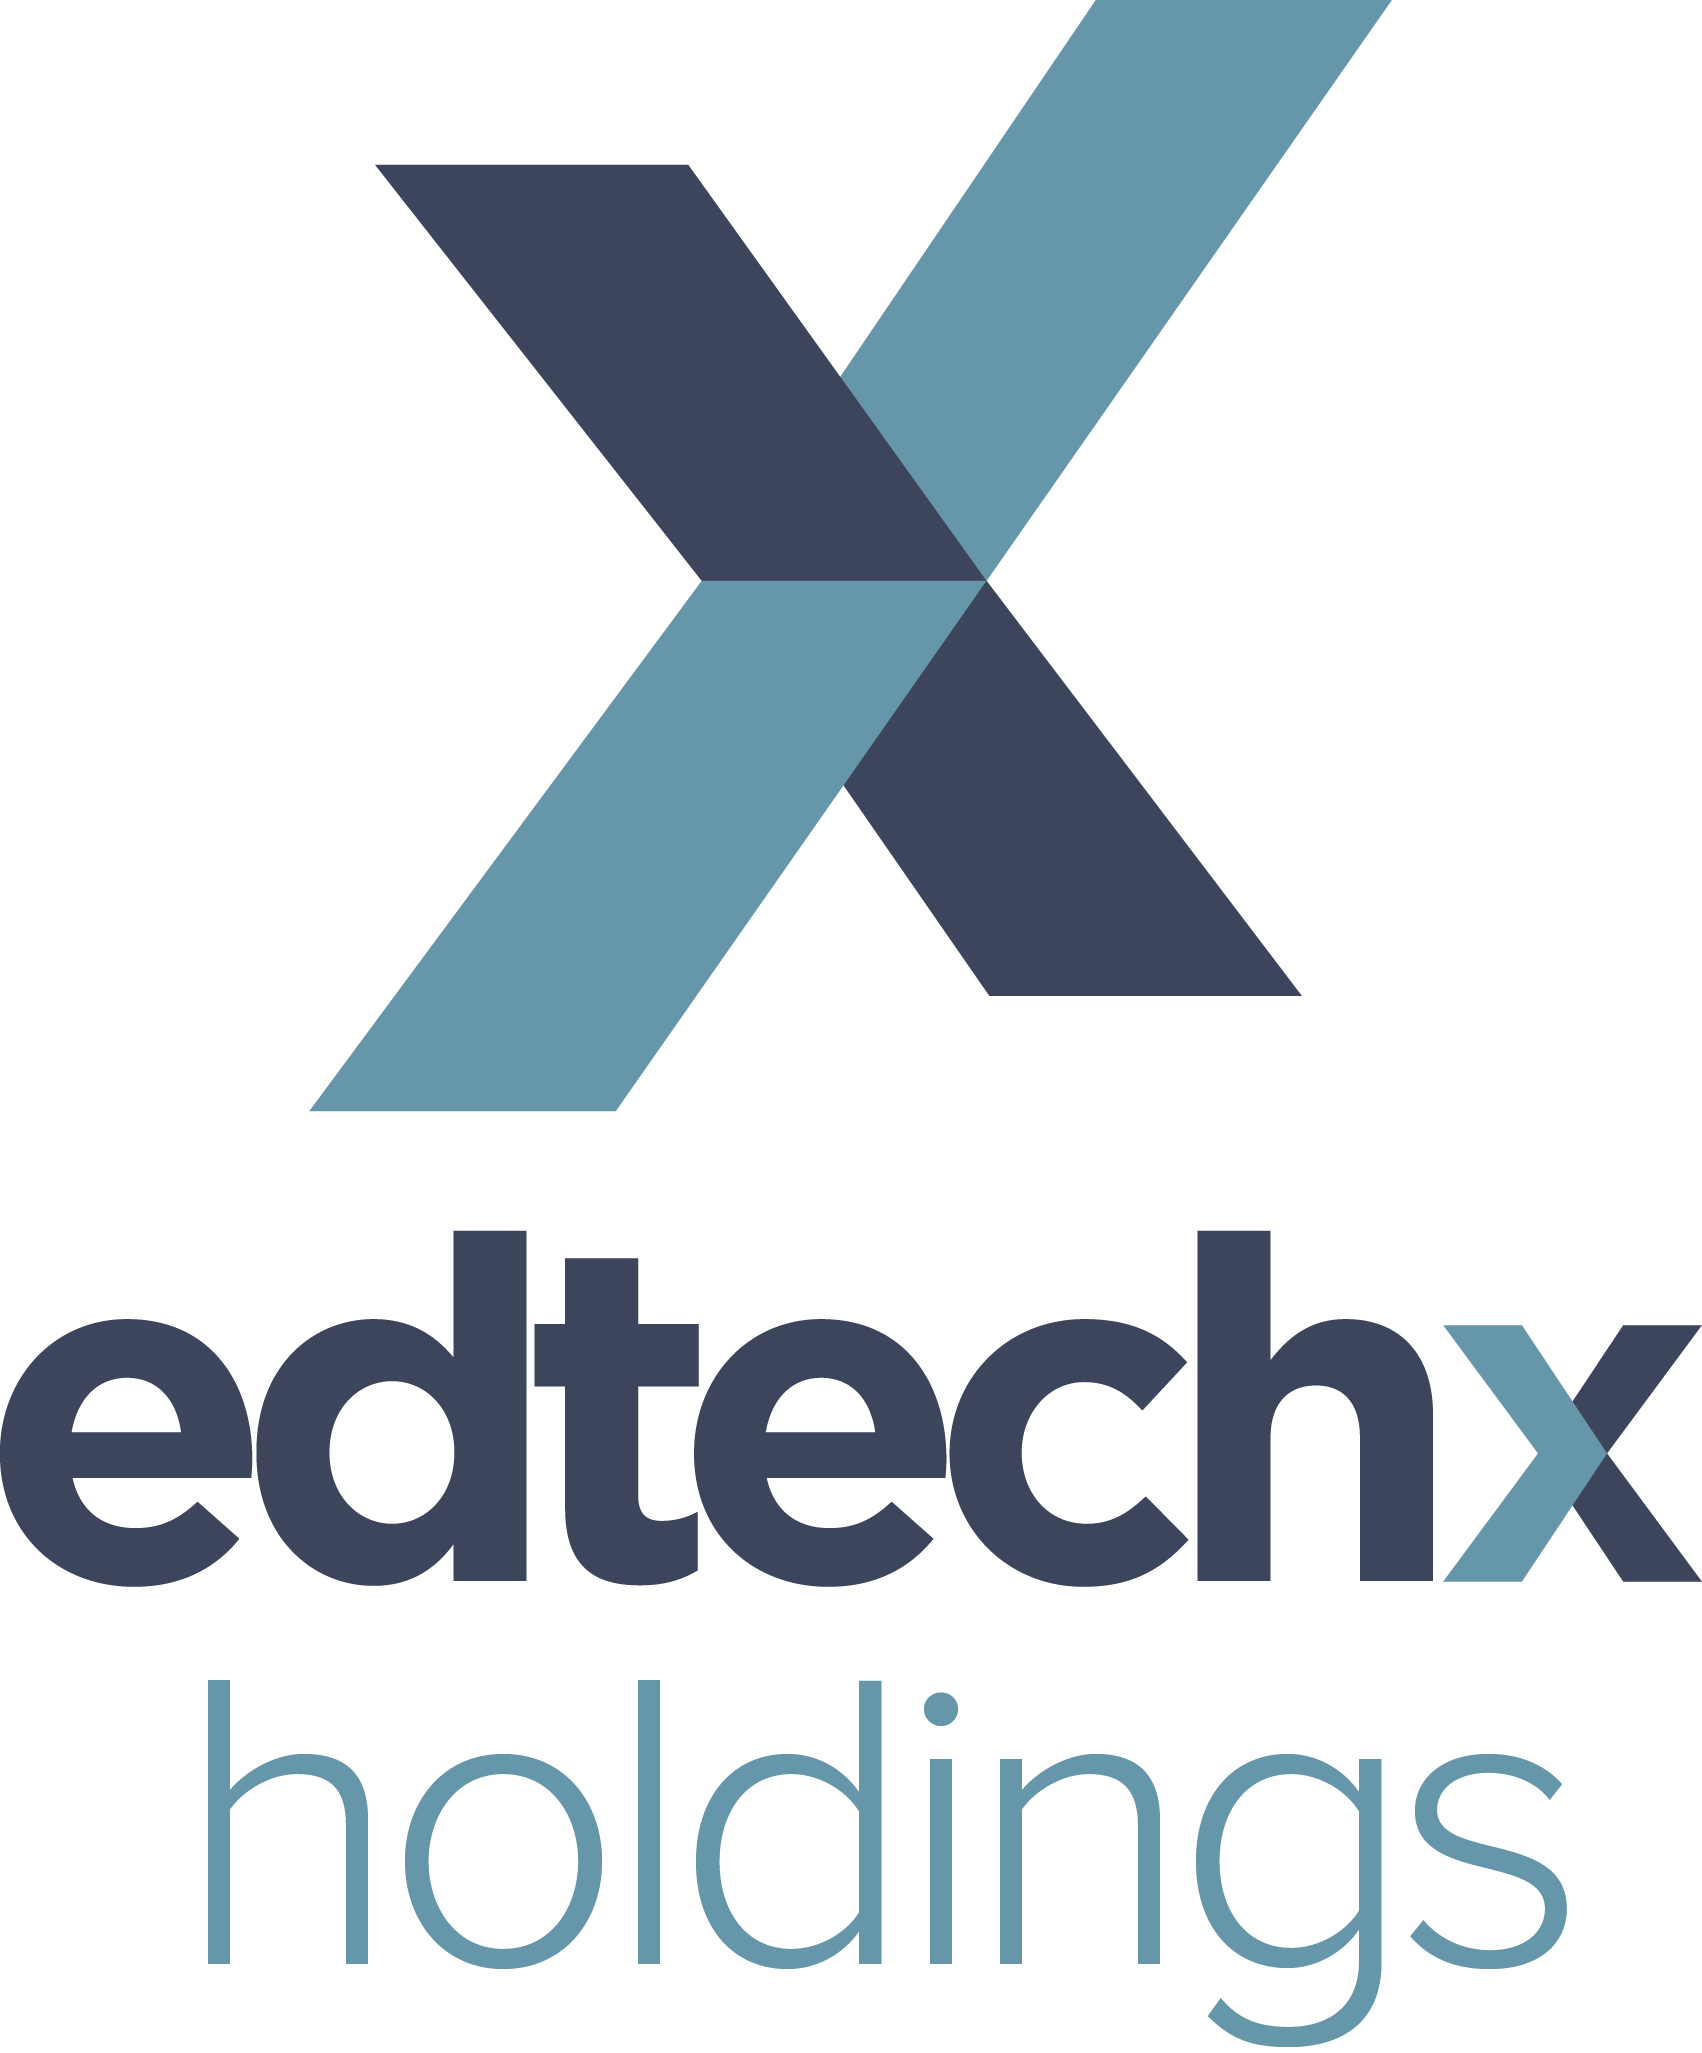 Logo EdtechX Holdings